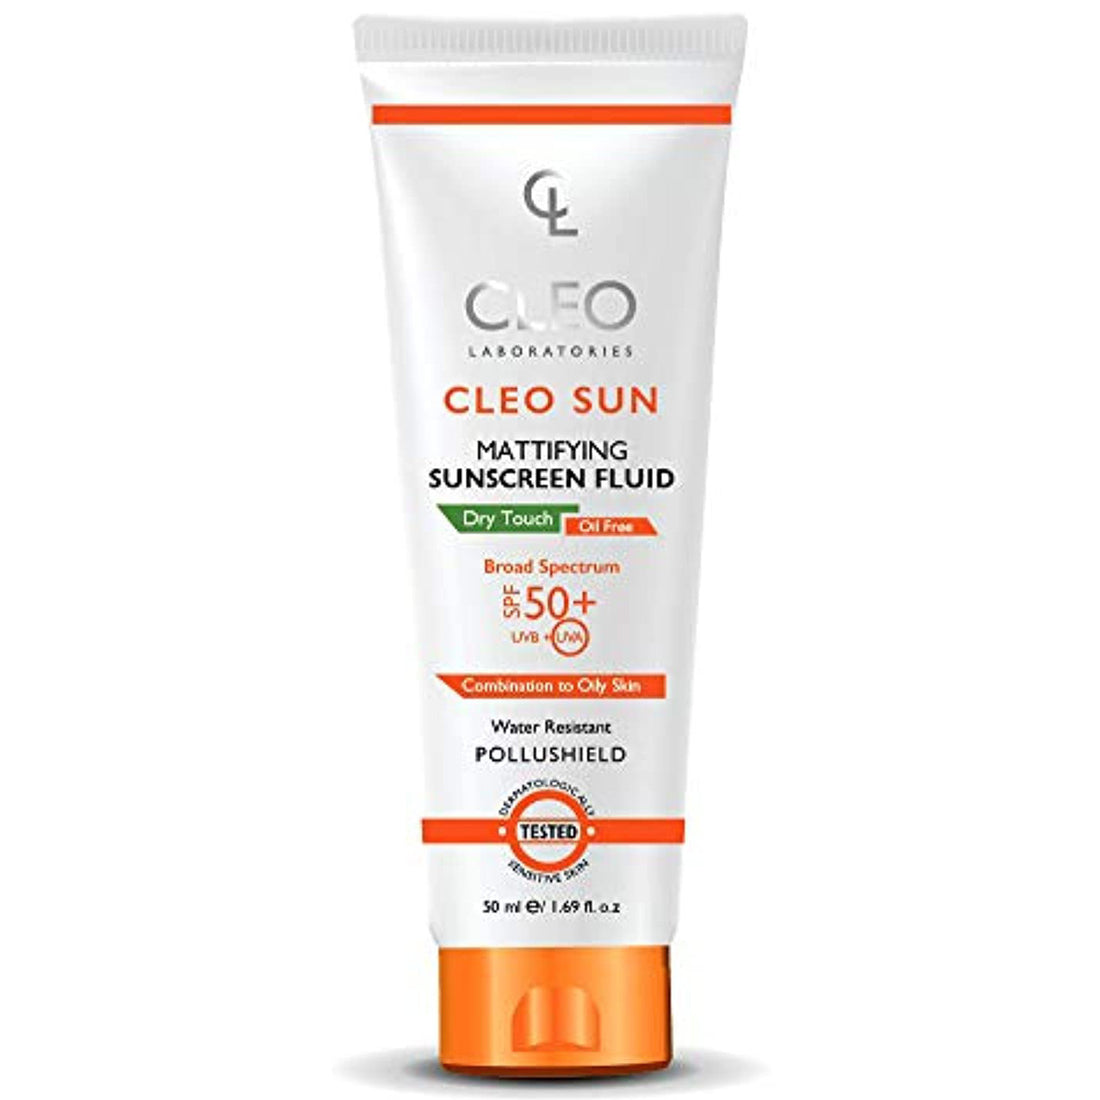 Cleo Laboratories Mattifying Sunscreen Fluid SPF 50+